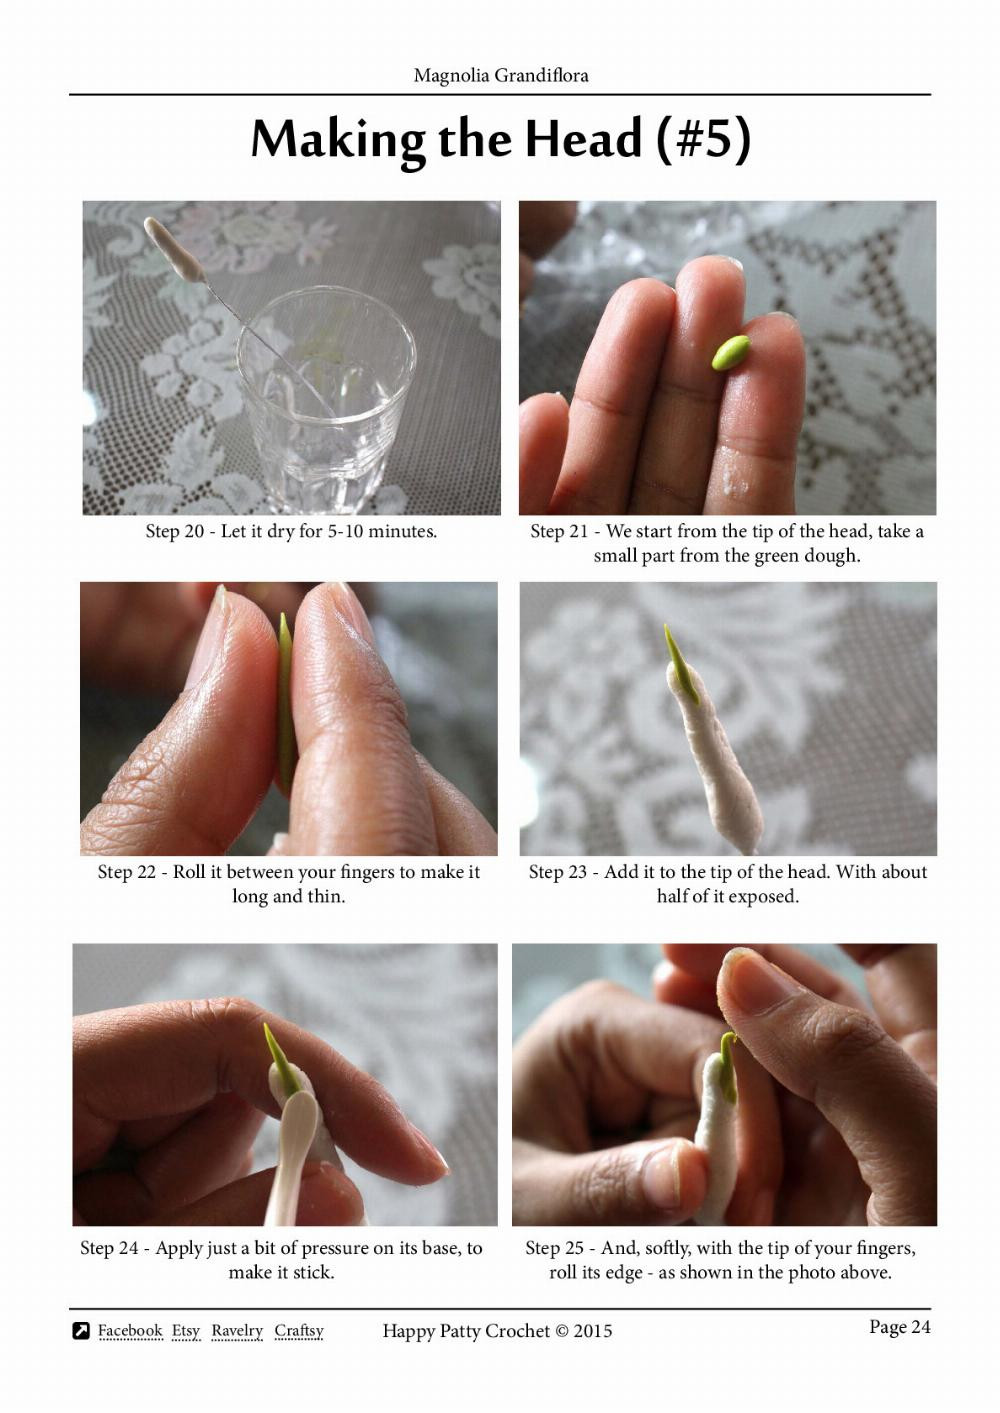 Patterns & Instructions Magnolia Grandiflora